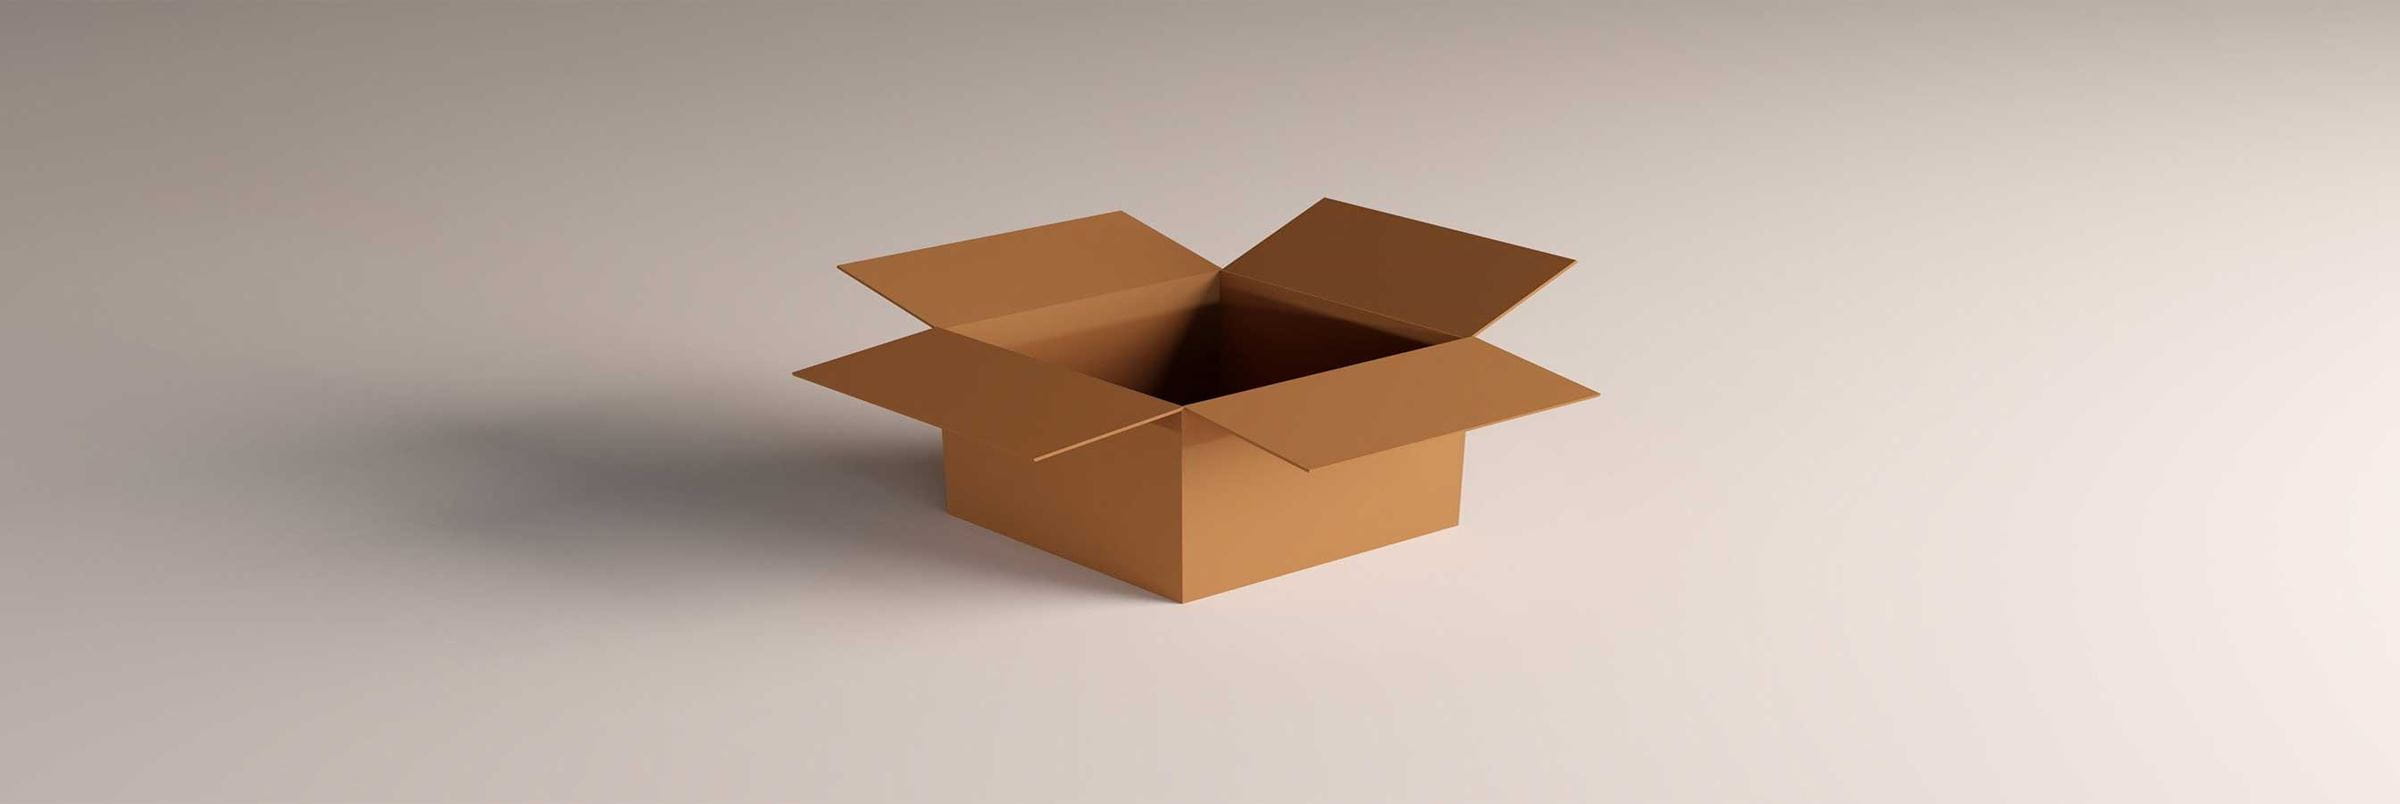 A solitary open cardboard box